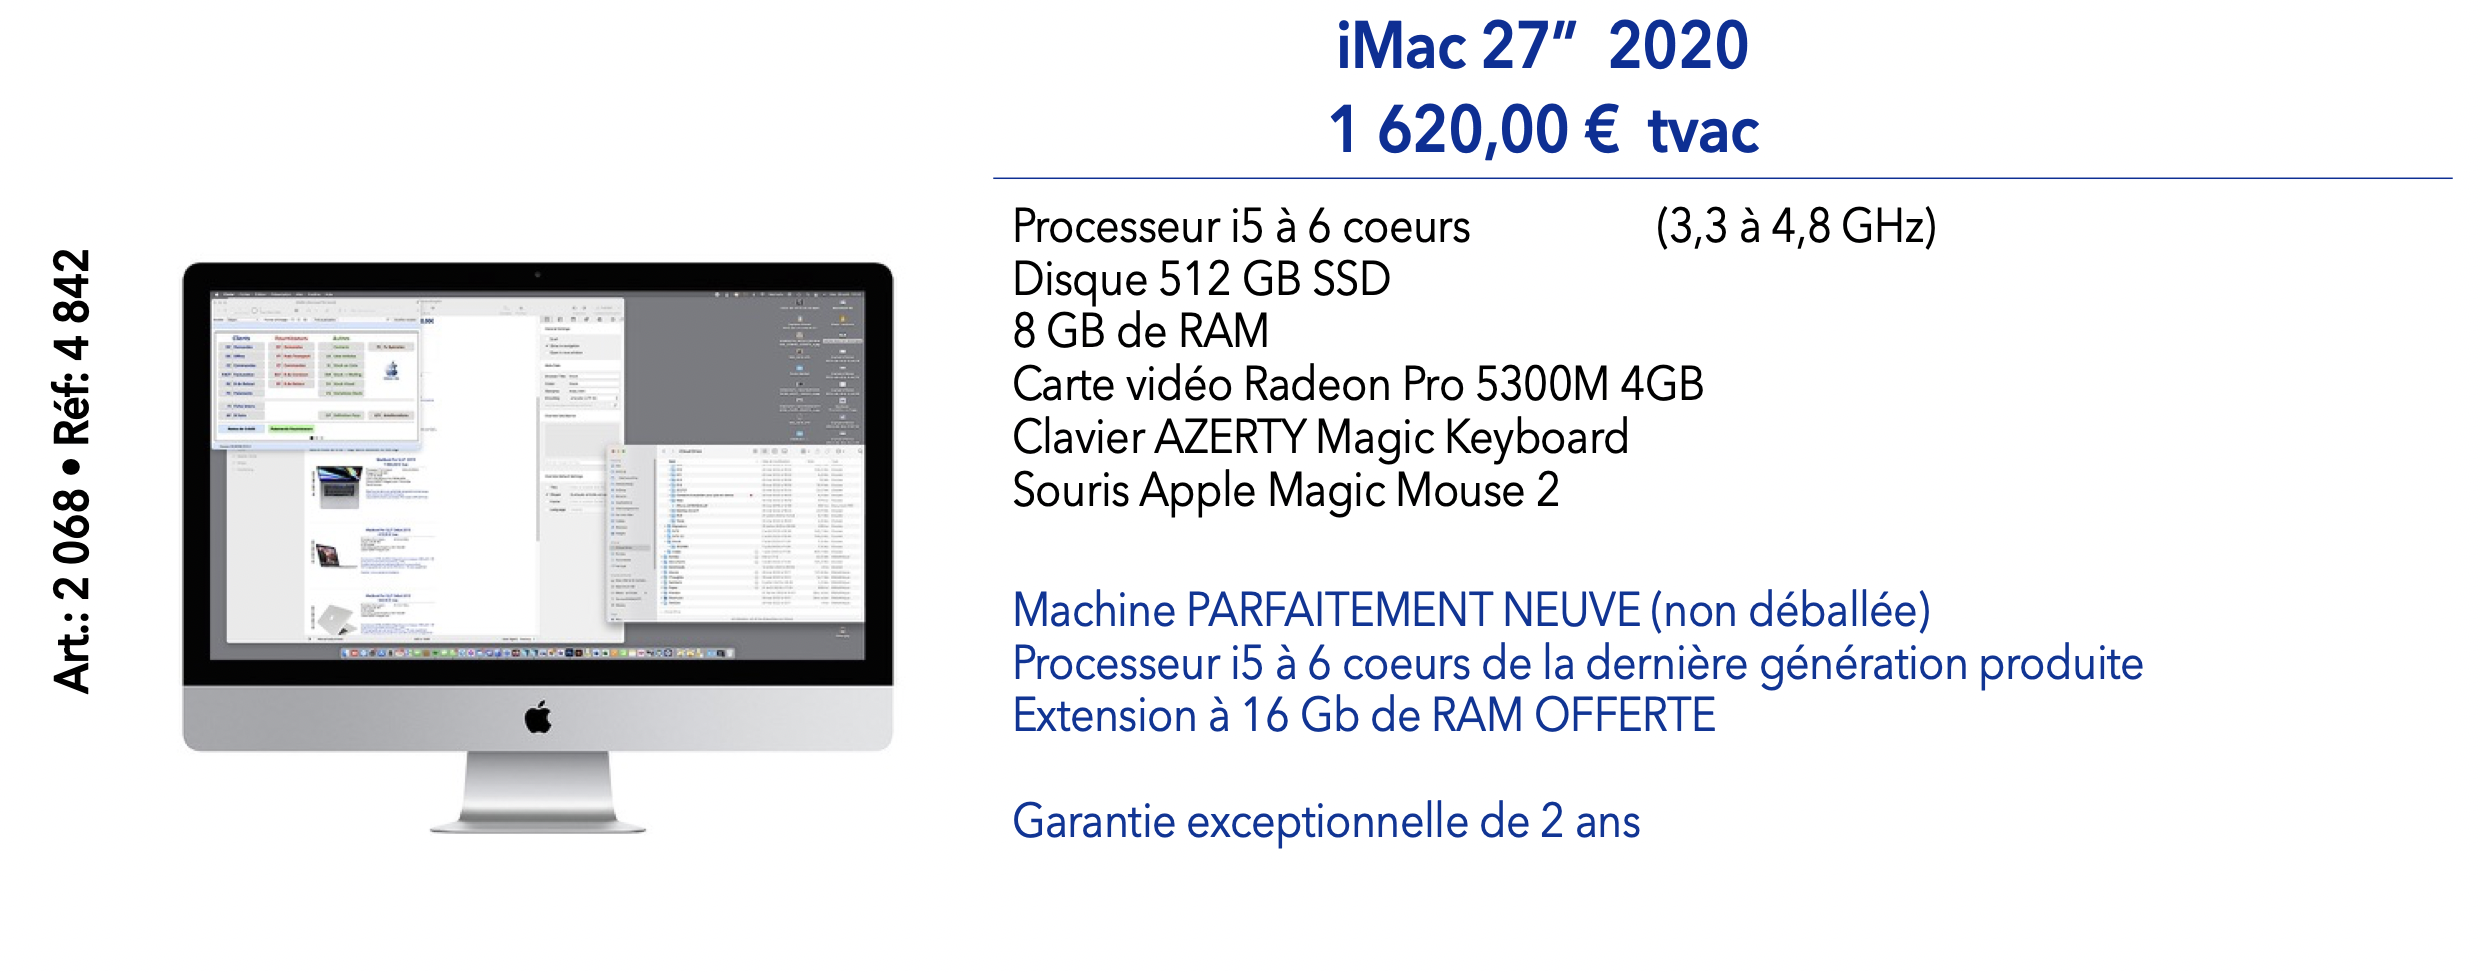 iMac 27 2020 4842